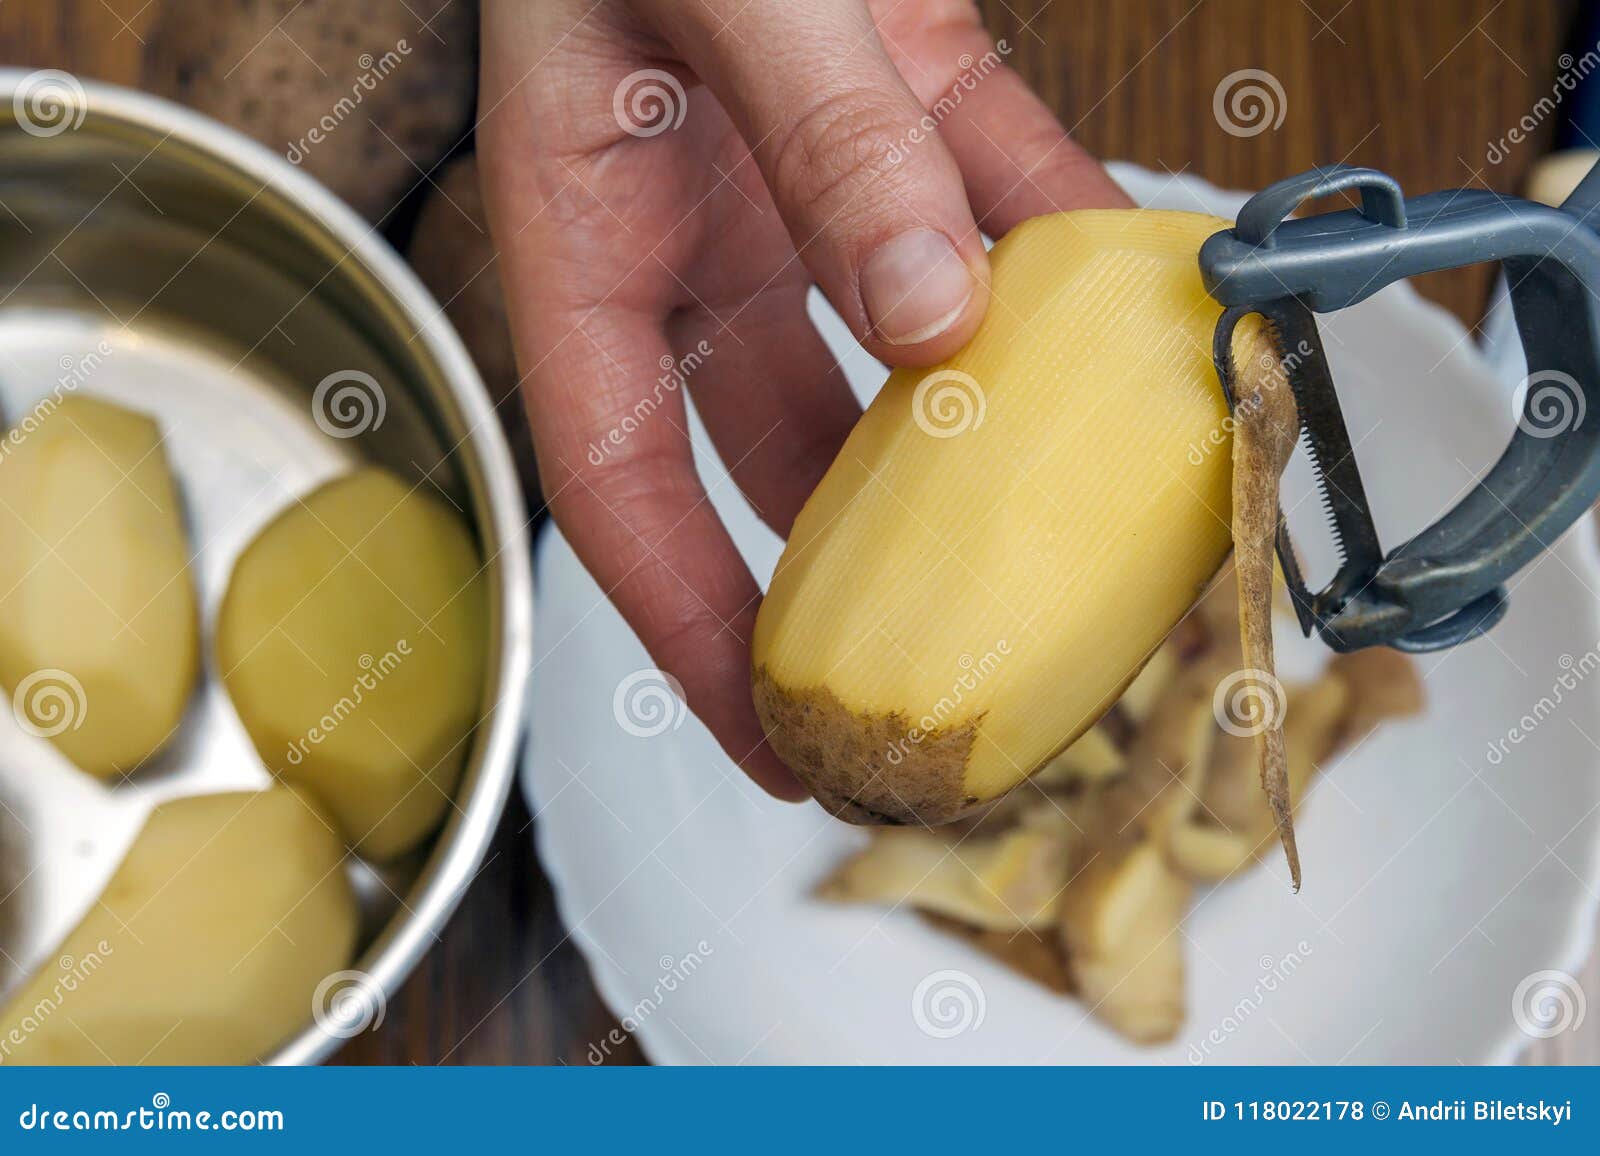 detail of woman hands peeling fresh yellow potato with kitchen p